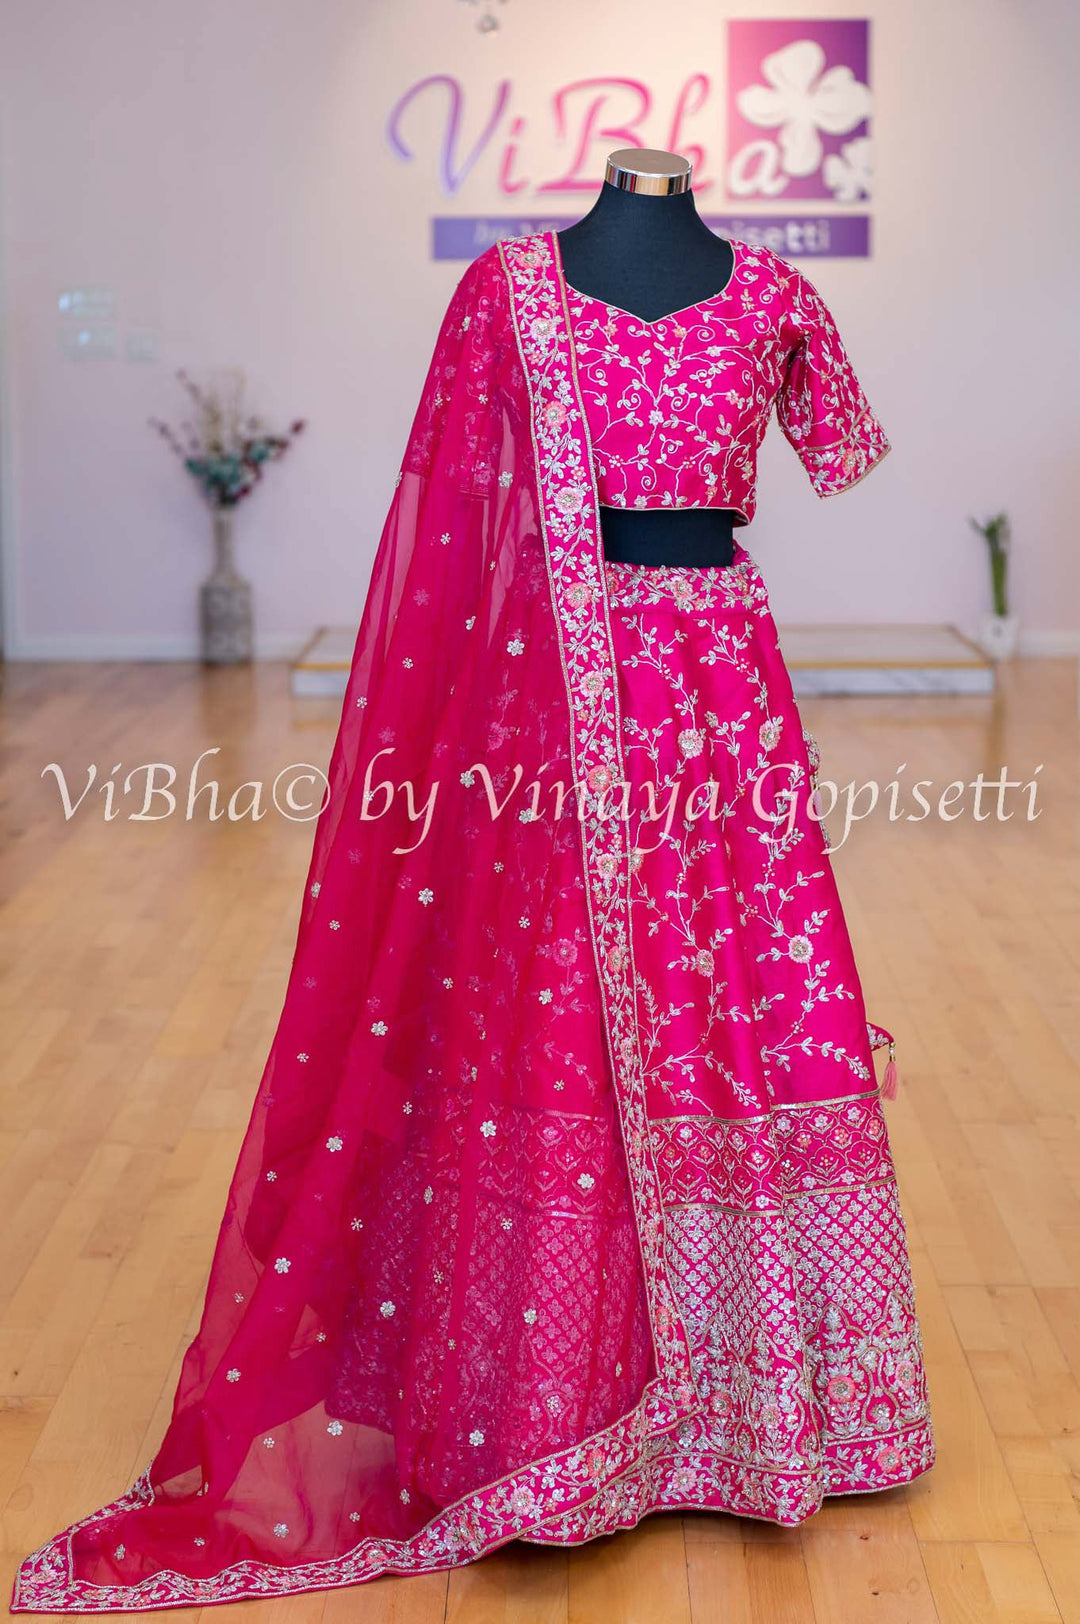 Accessories & Jewelry - Dark Pink Raw Silk Lehenga Blouse With Heavy Resham And Zari Embroidery And Net Dupatta